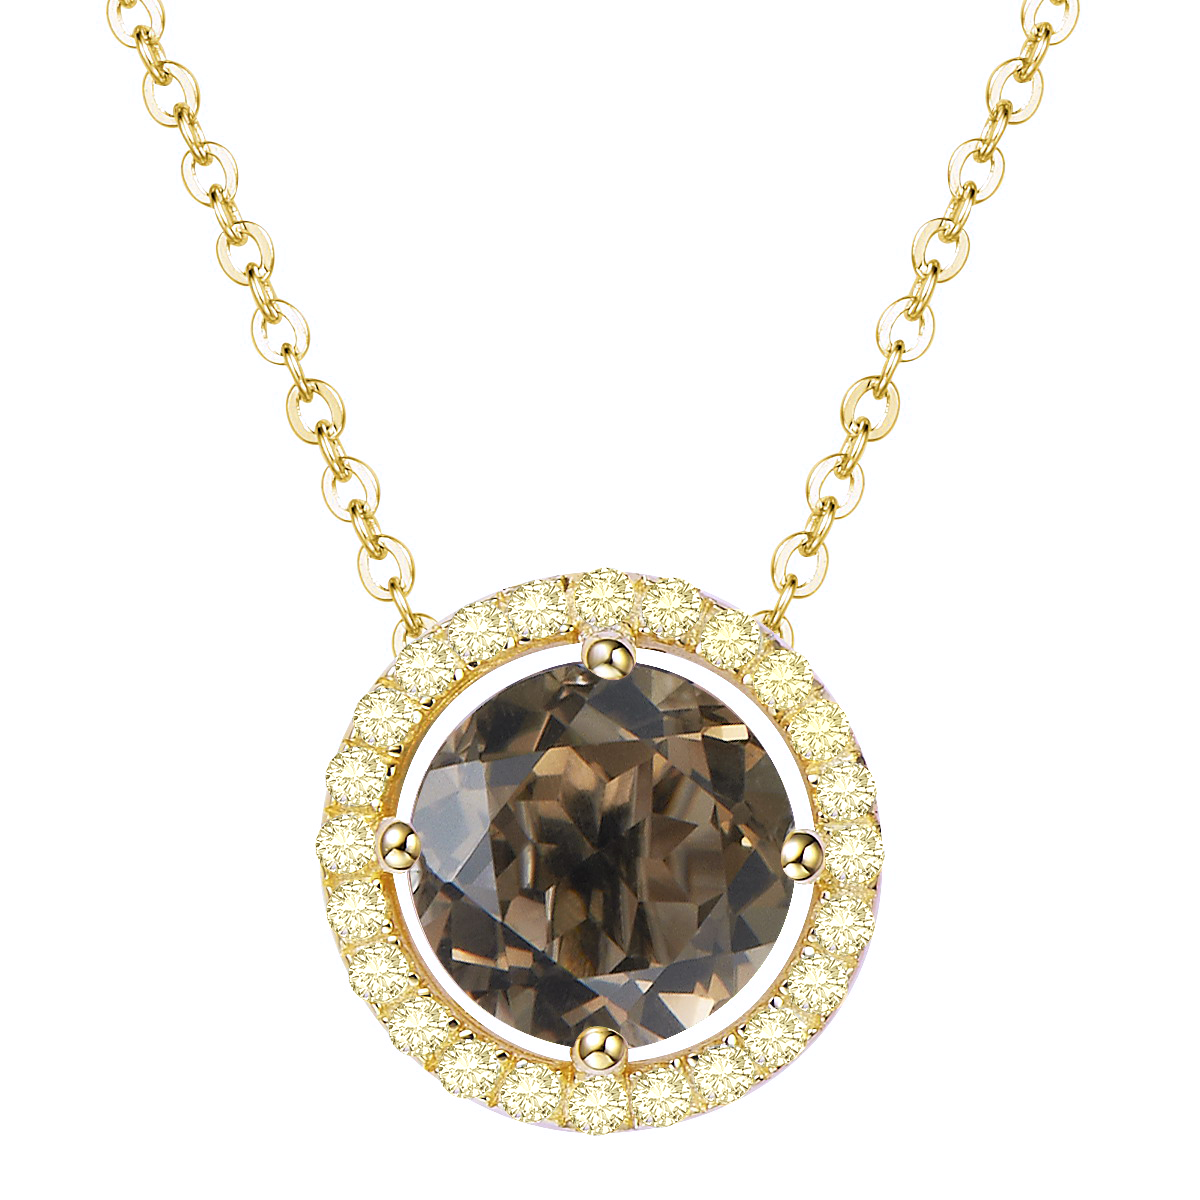 Royal Gold Smoky Quartz Necklace - H.AZEEM London